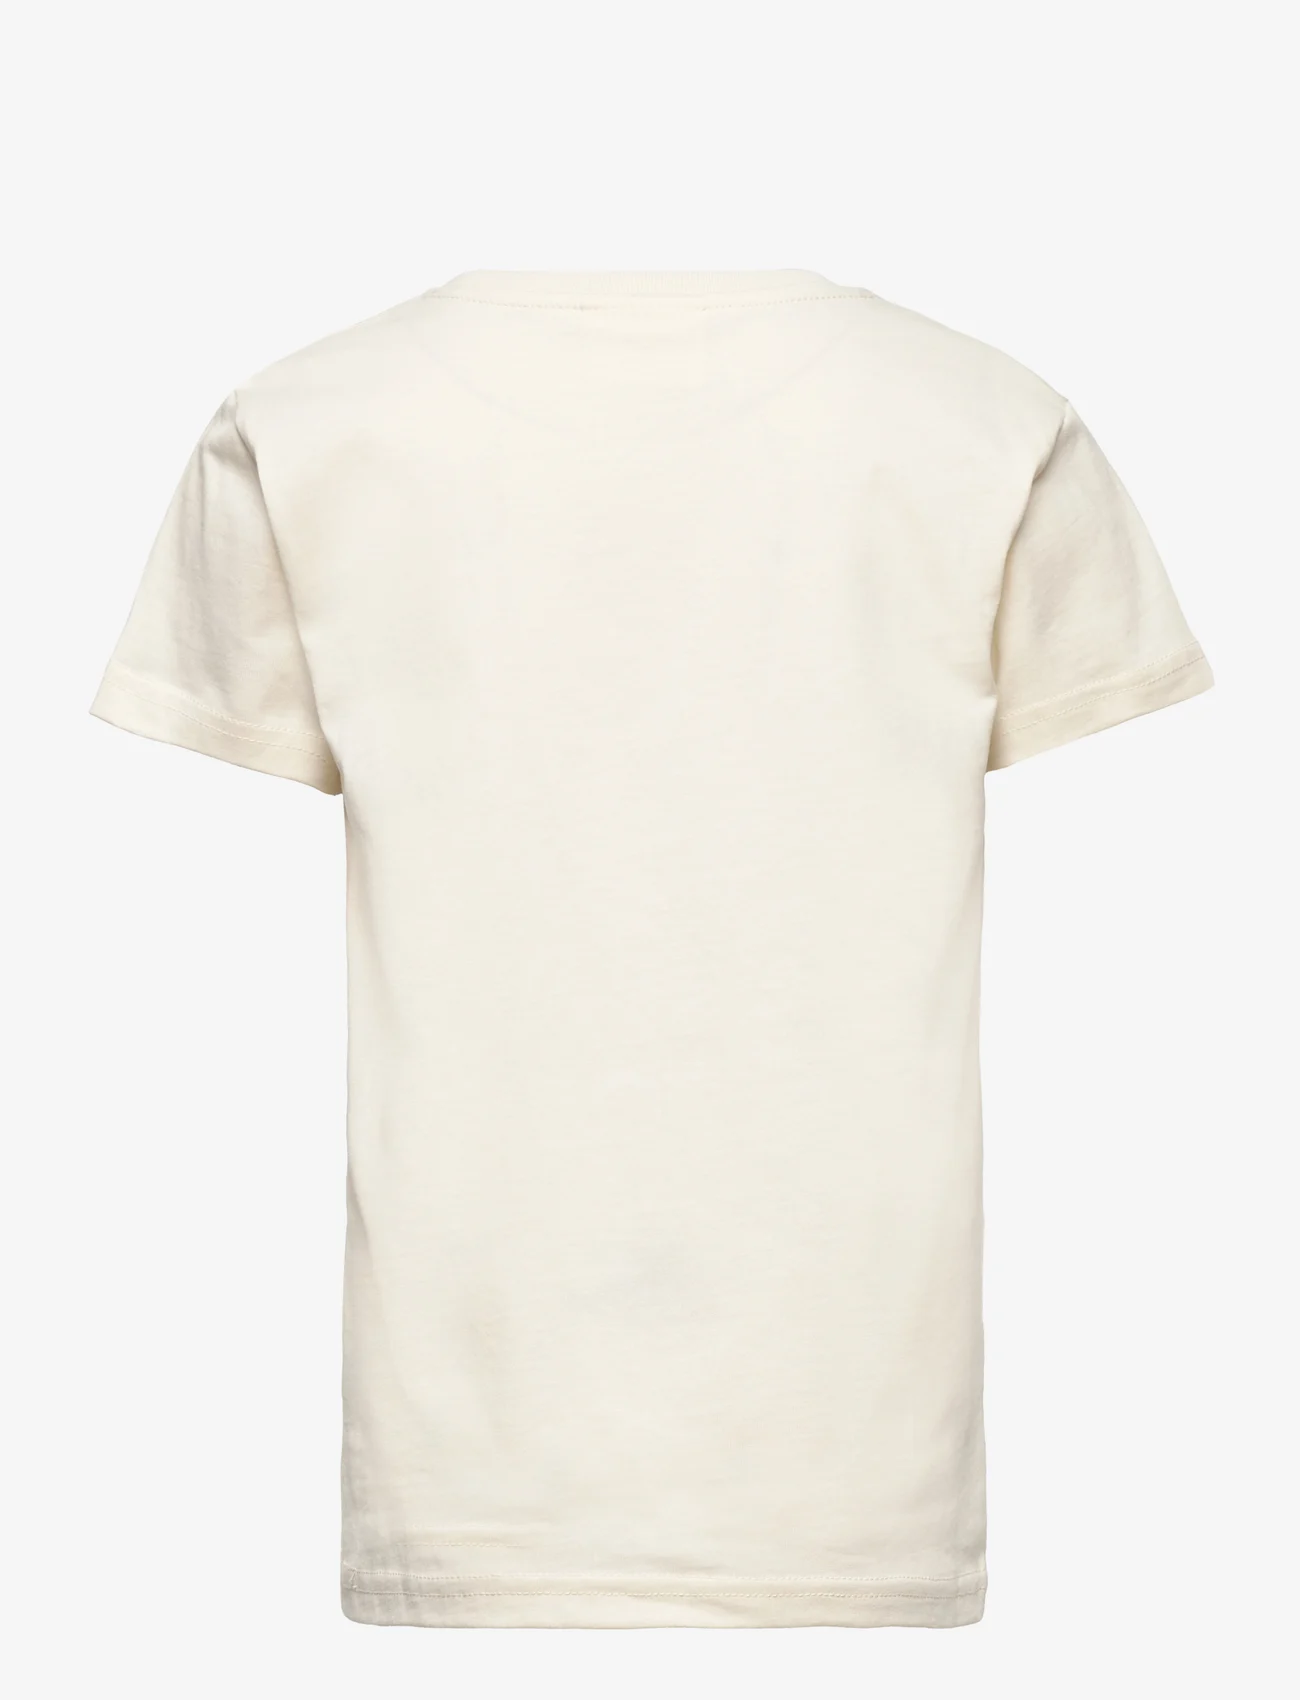 Sofie Schnoor Baby and Kids - T-shirt - kortærmede t-shirts - antique white - 1